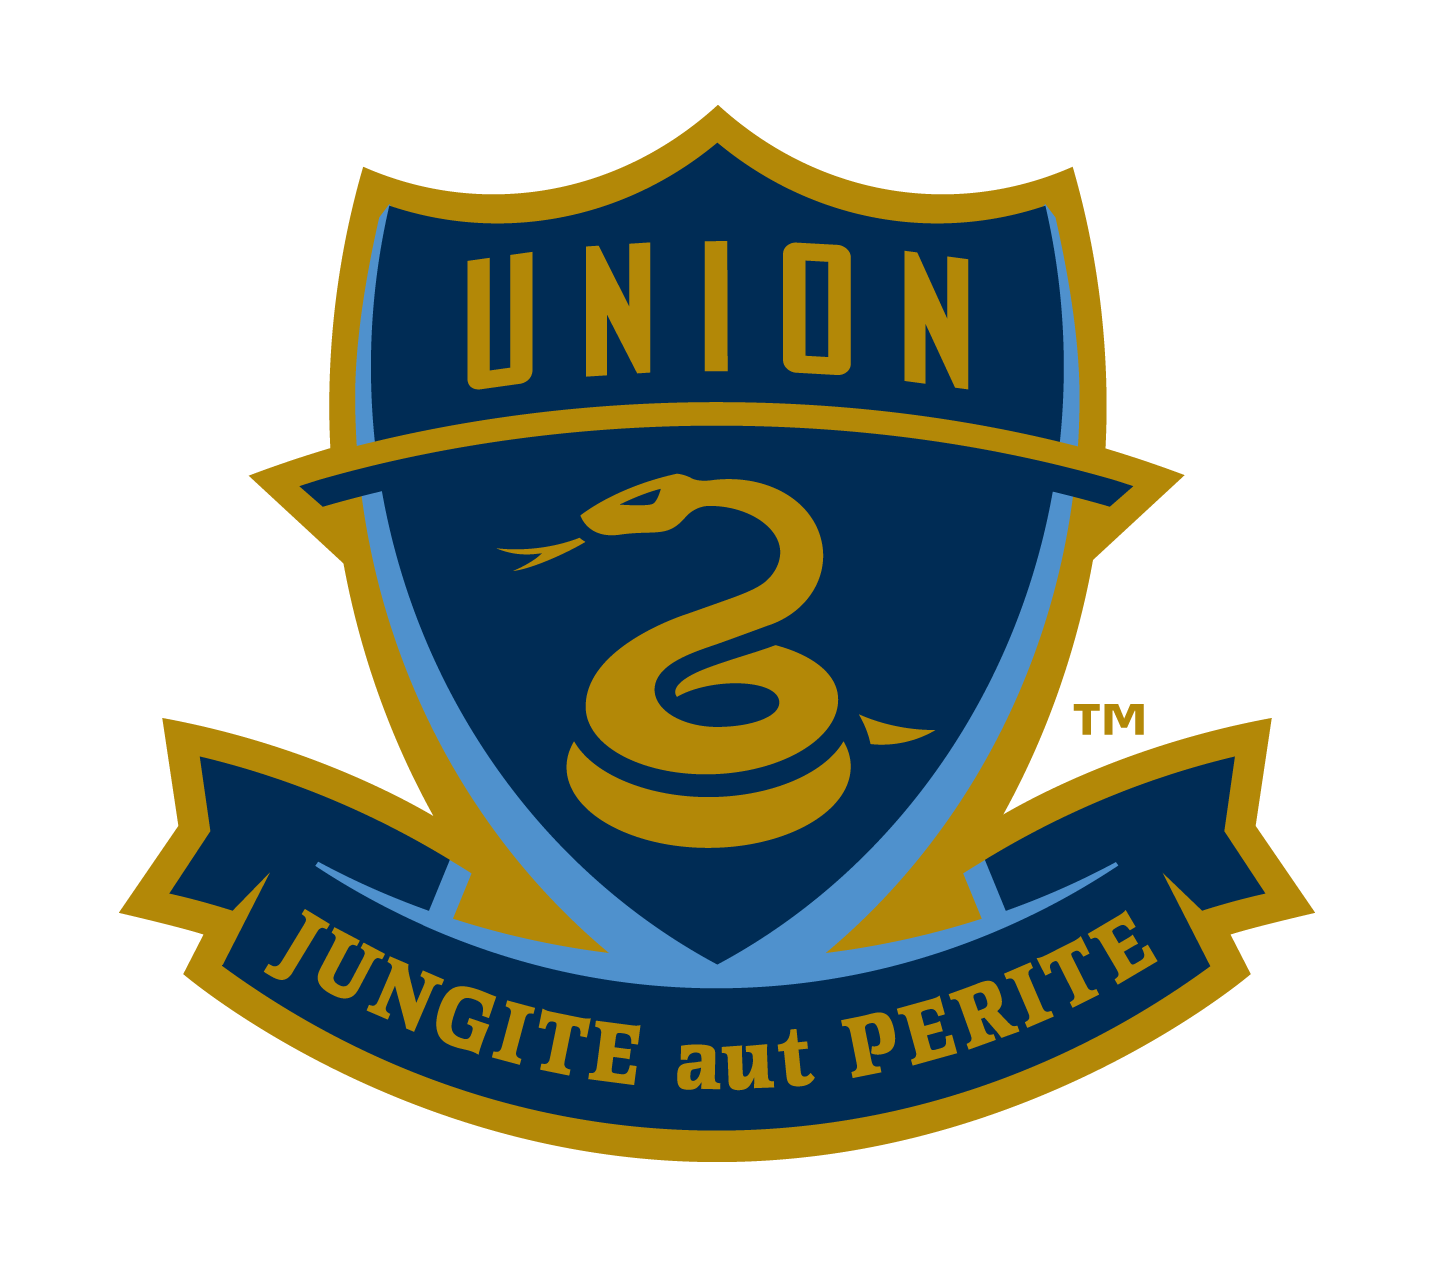 Logo Philadelphia Union PNG-P